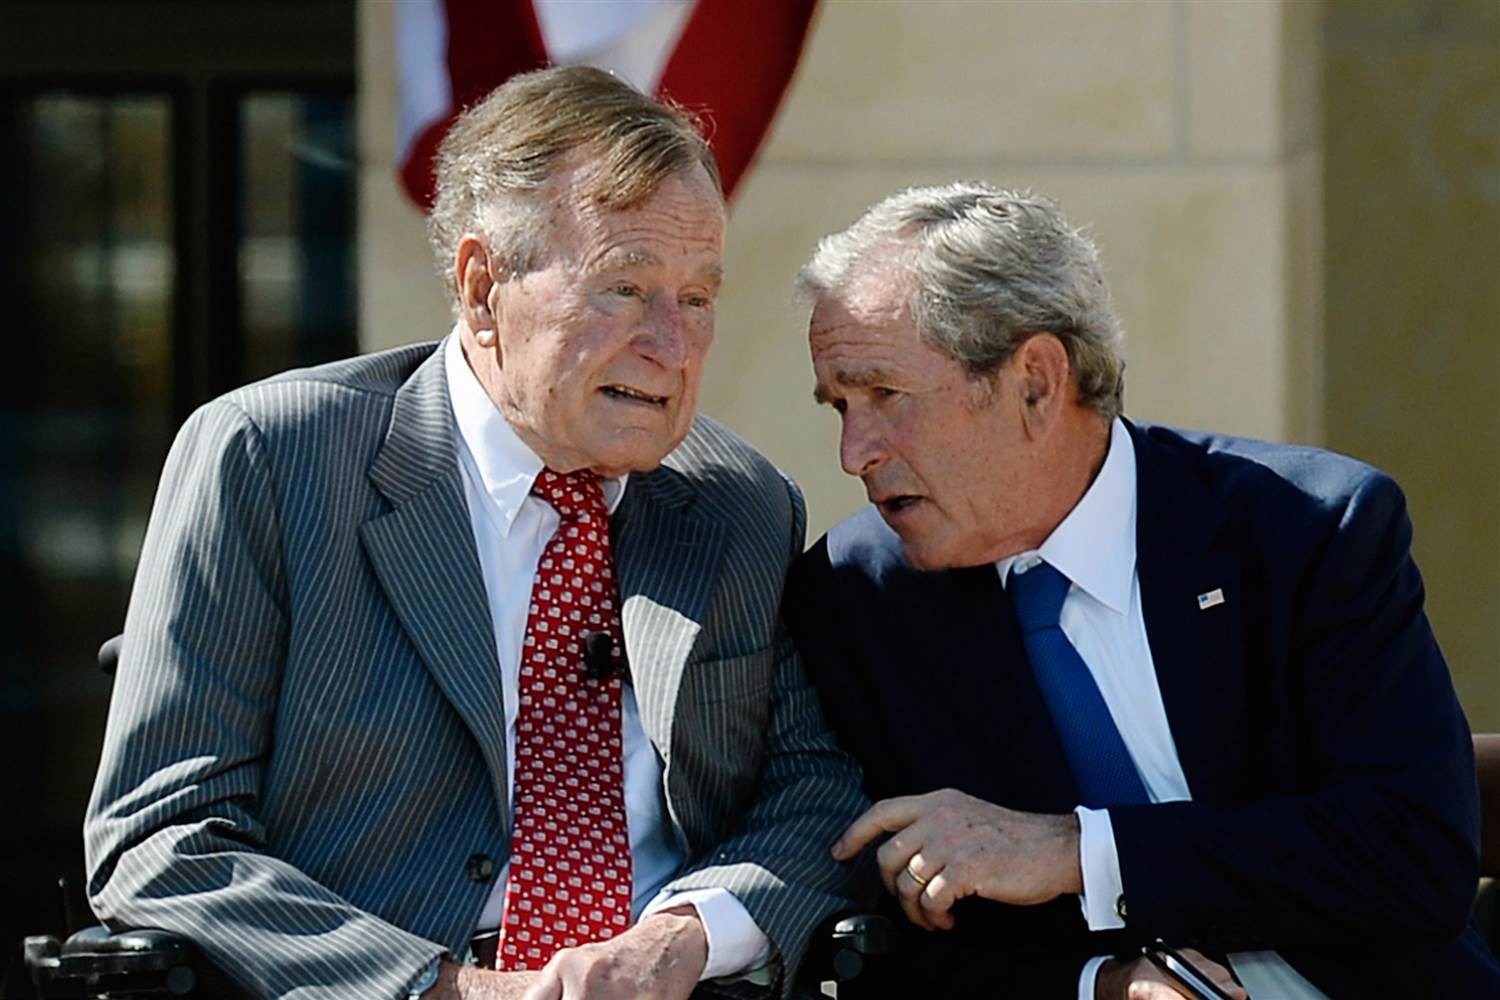 Sit Down, Shut Up (Don&39t Talk) The Bush